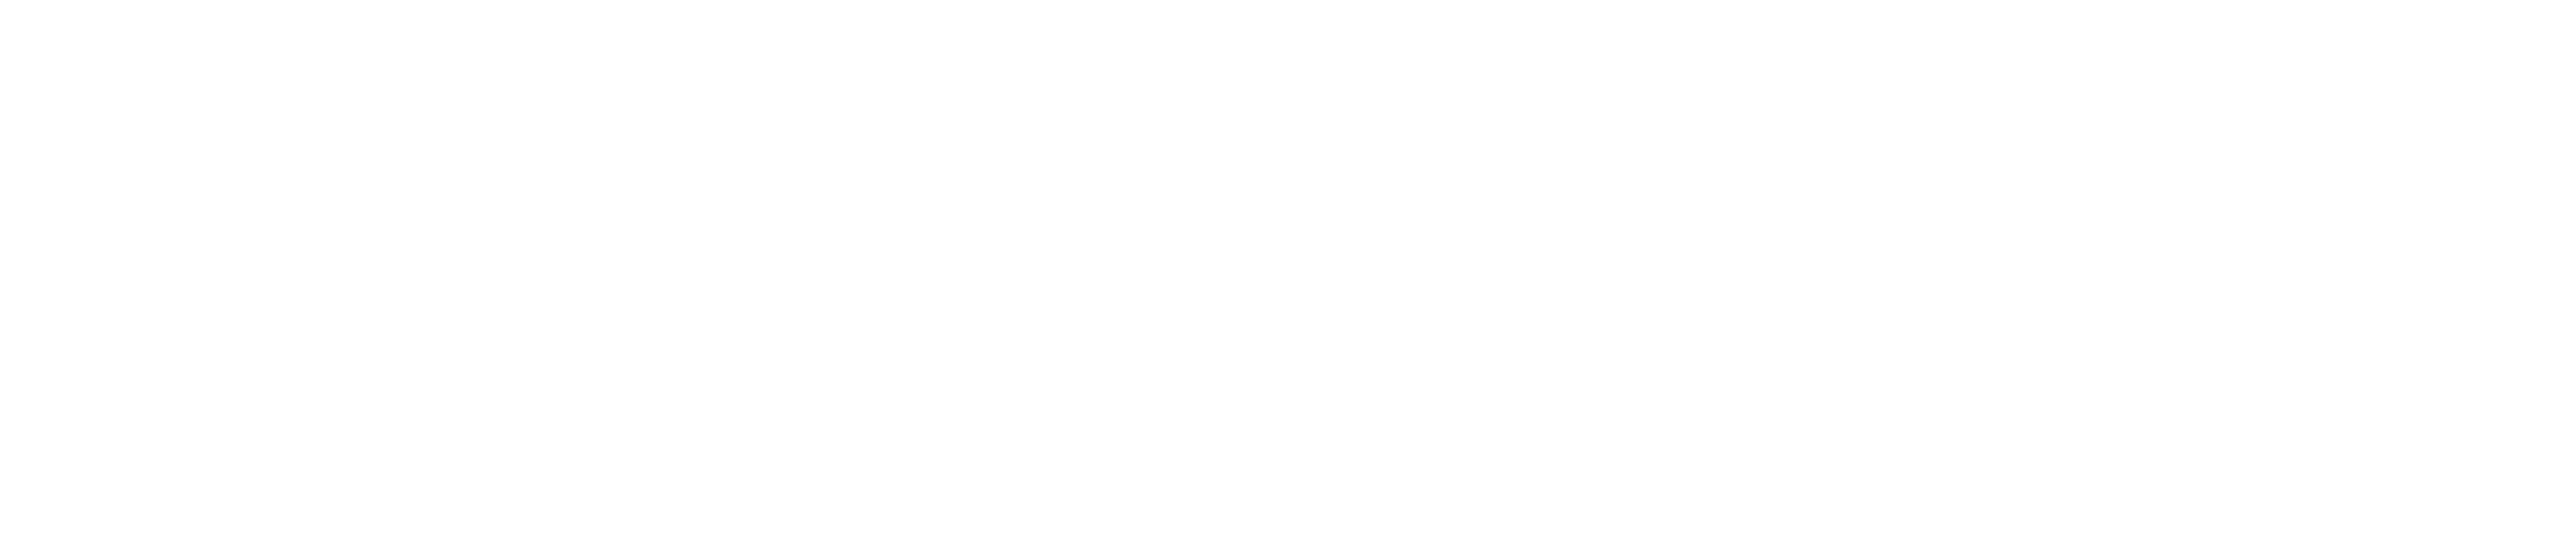 dataLove logo